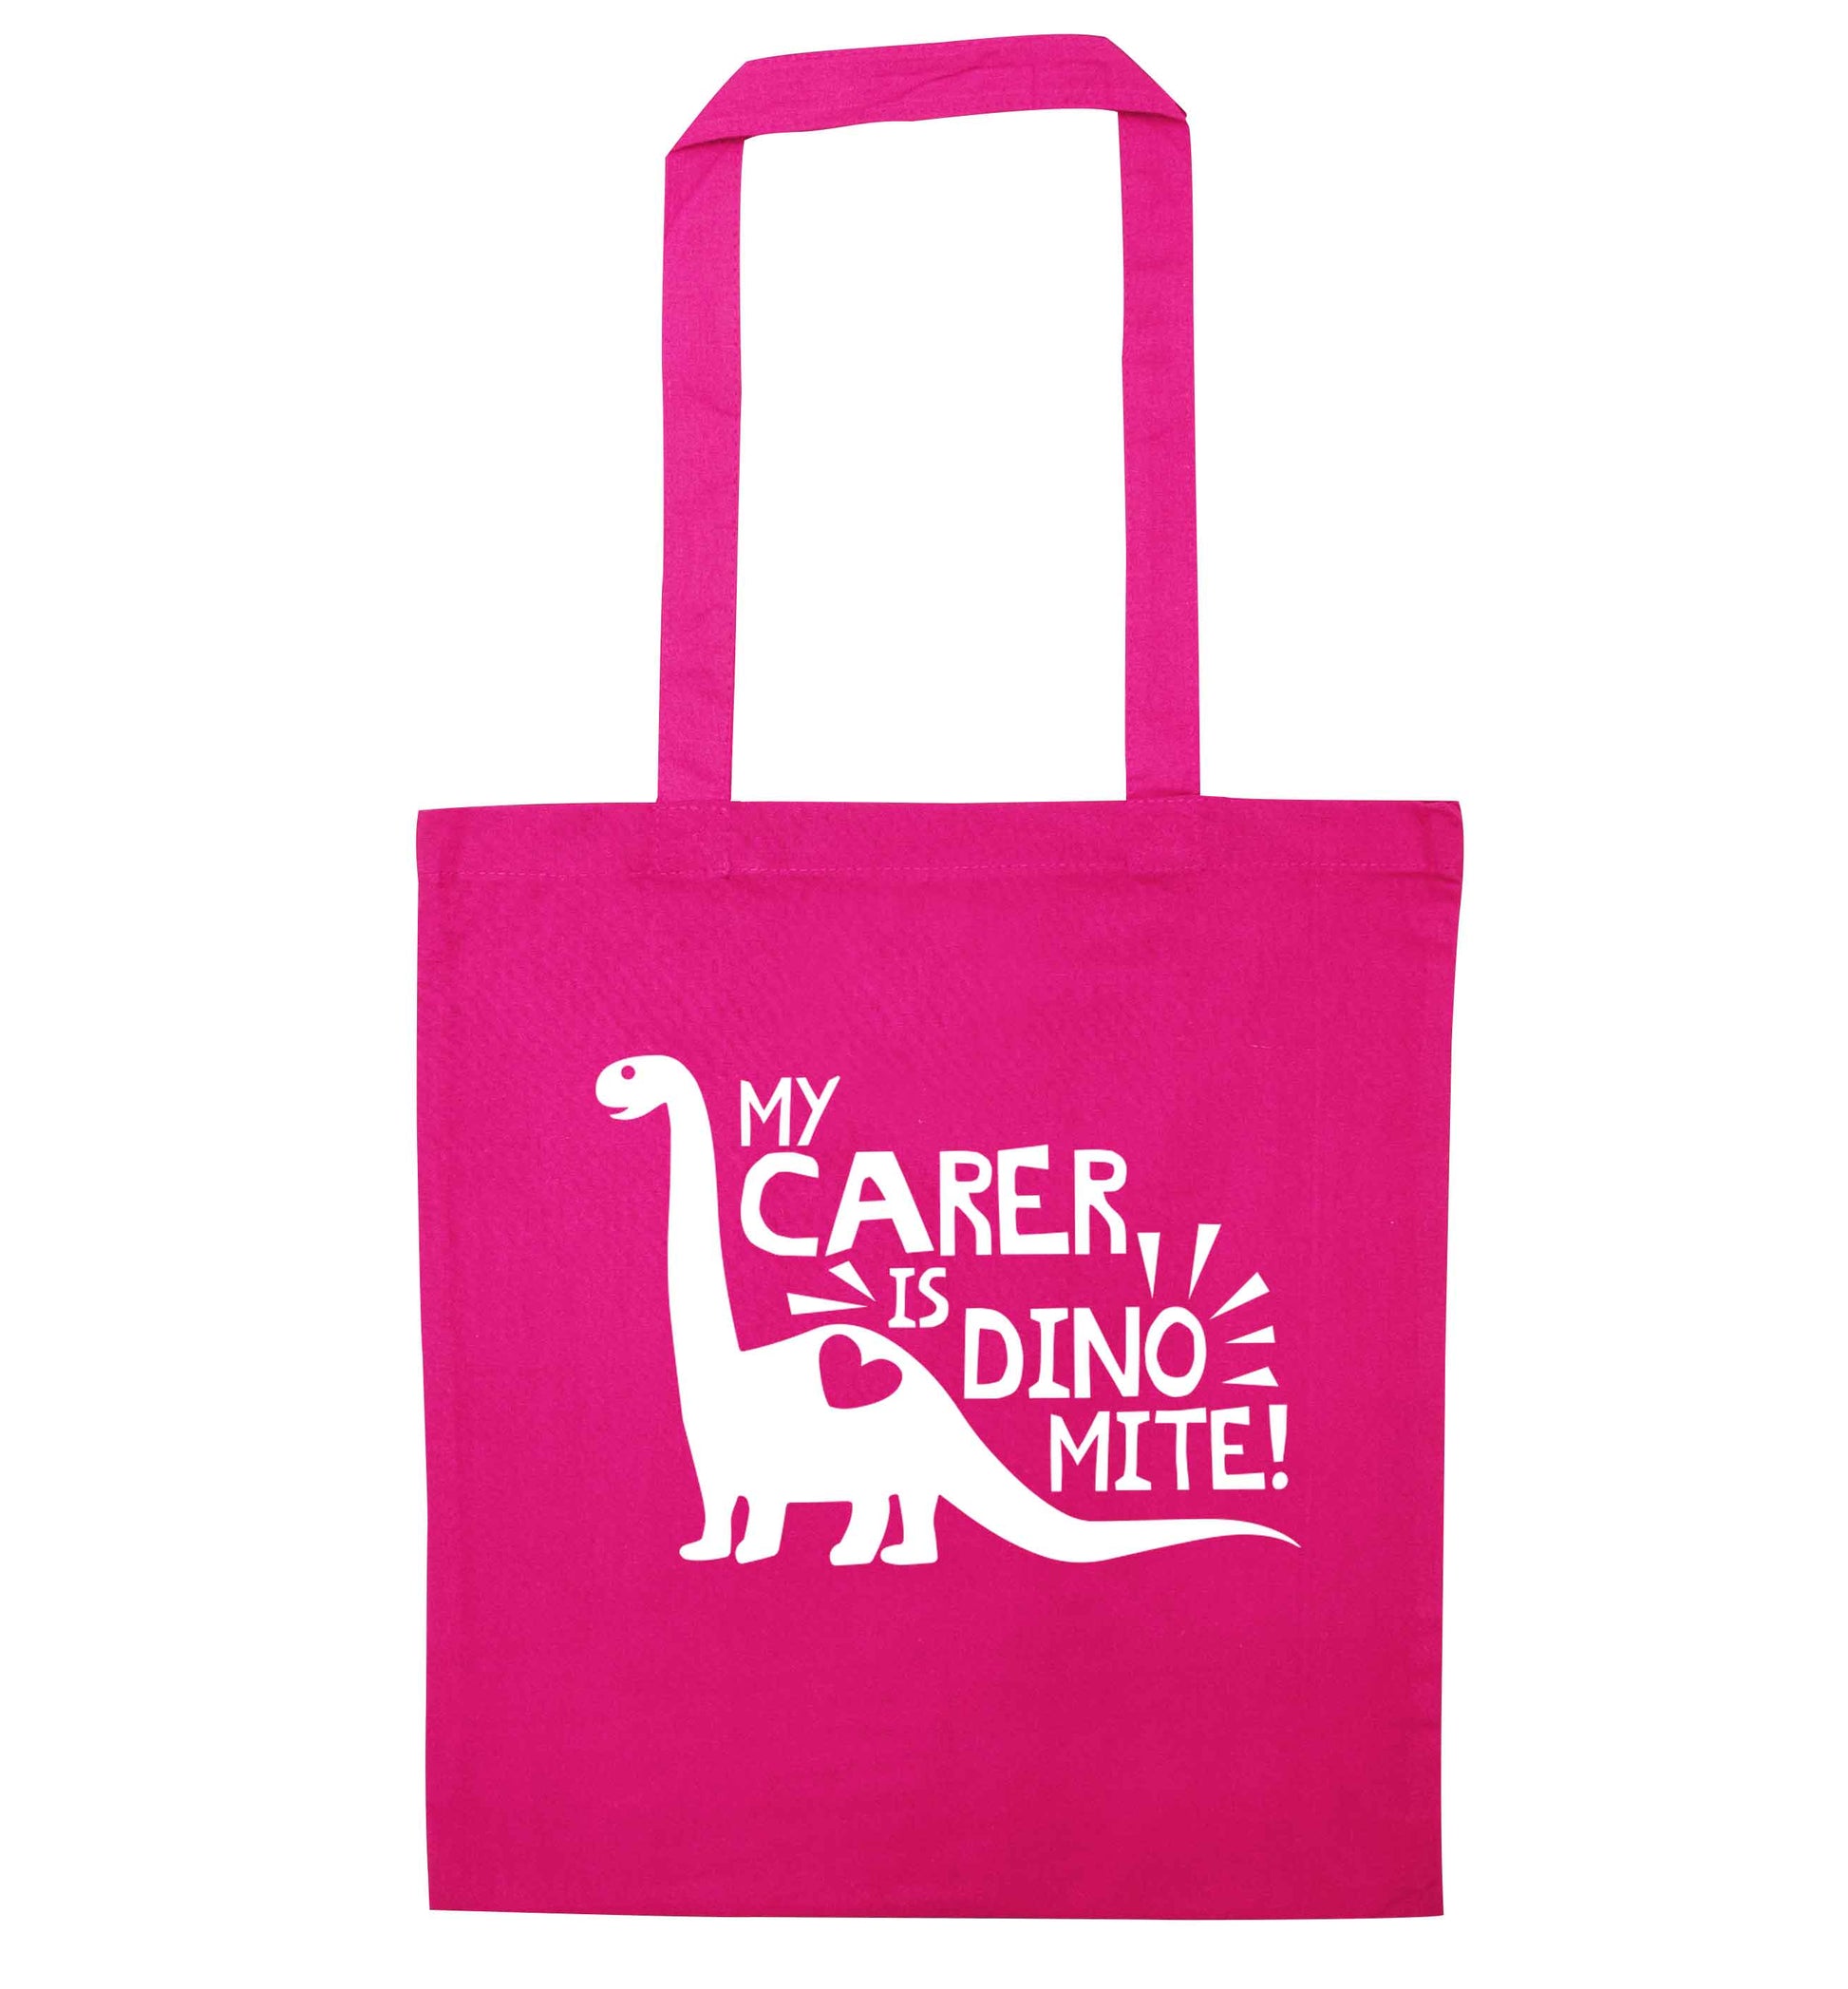 My carer is dinomite! pink tote bag